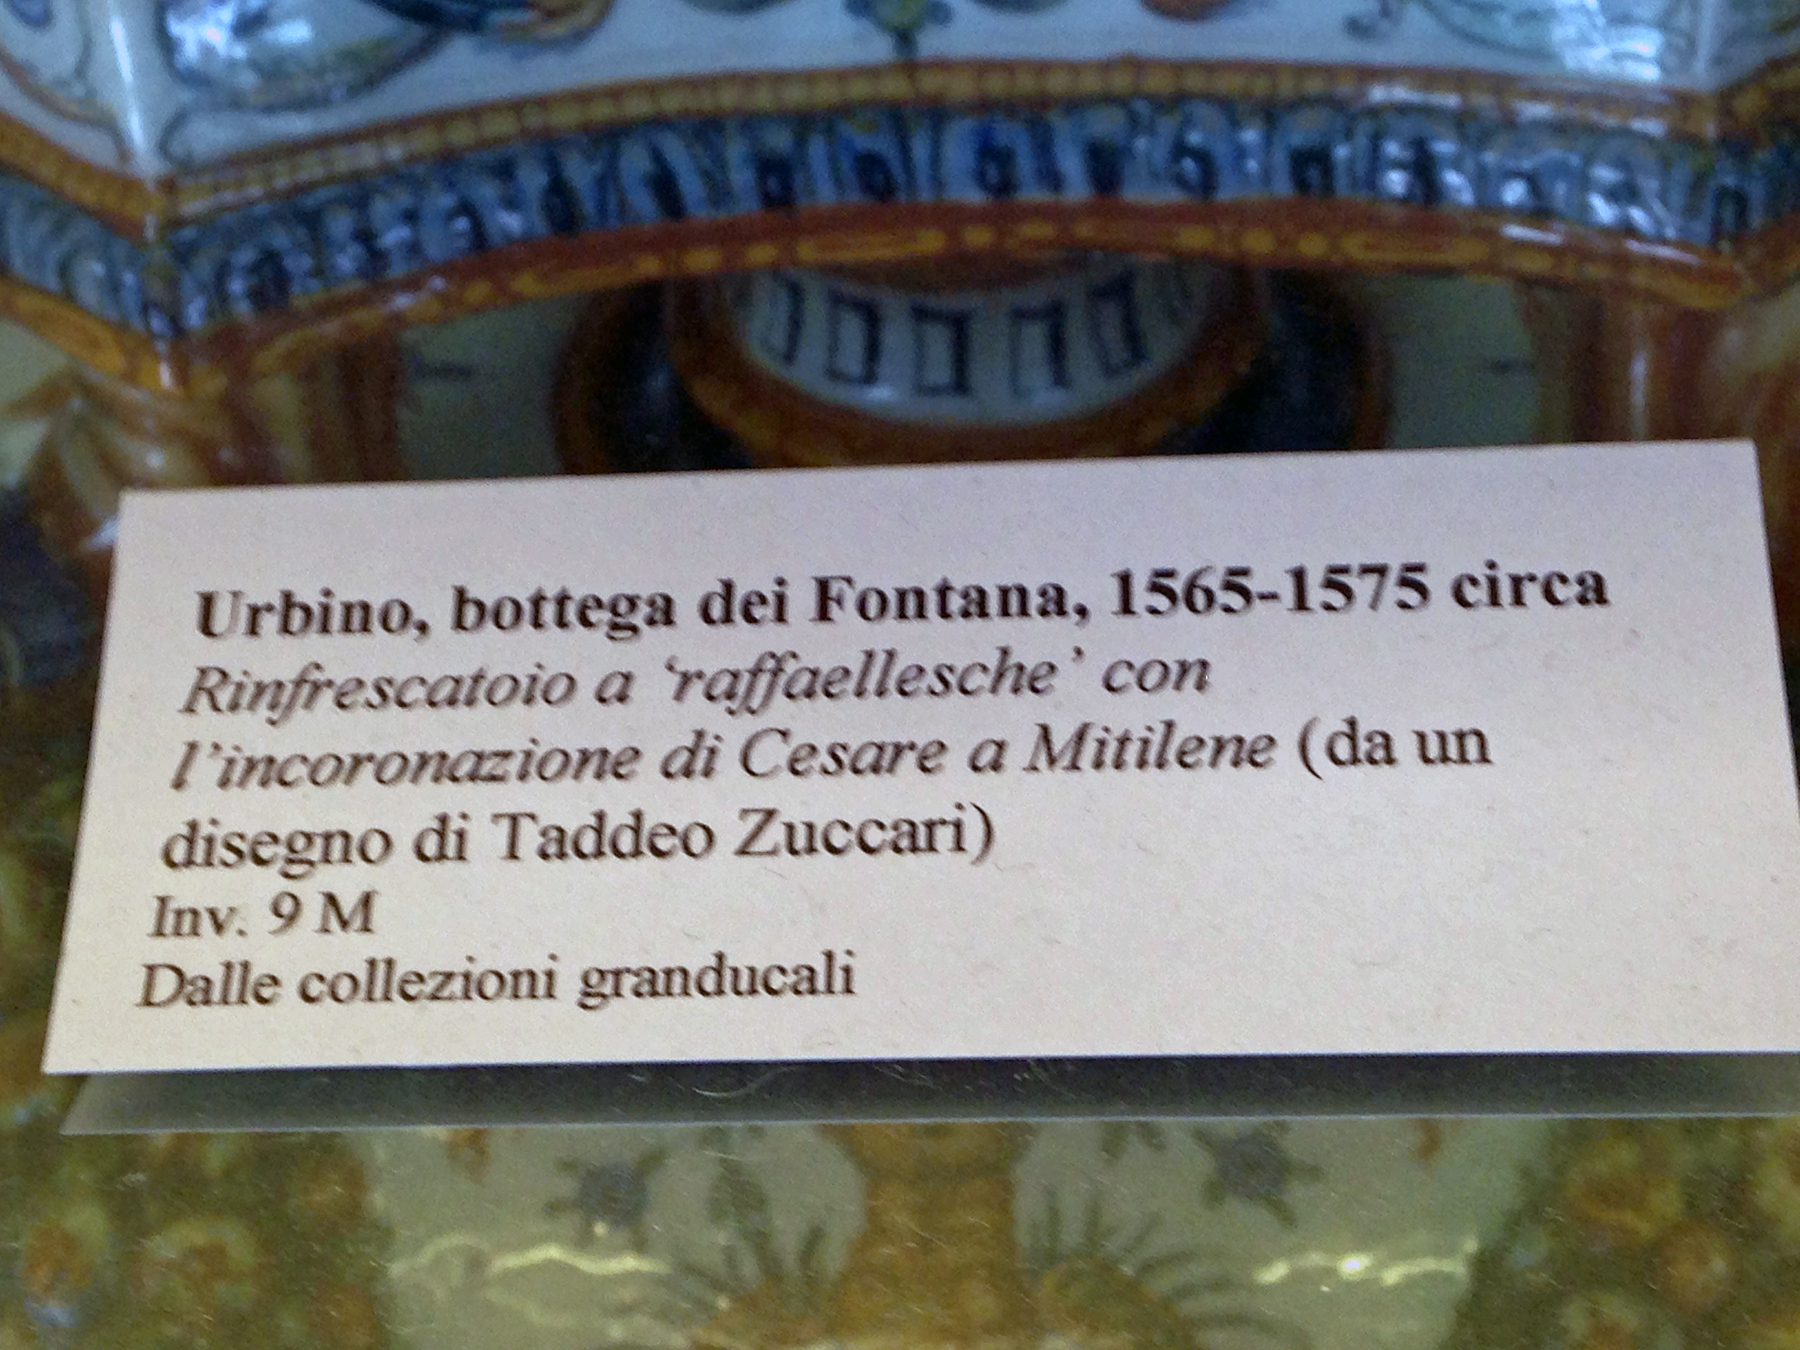 Label for 15th C. ceramic in Palazzo Vecchio, Florence, Italy.